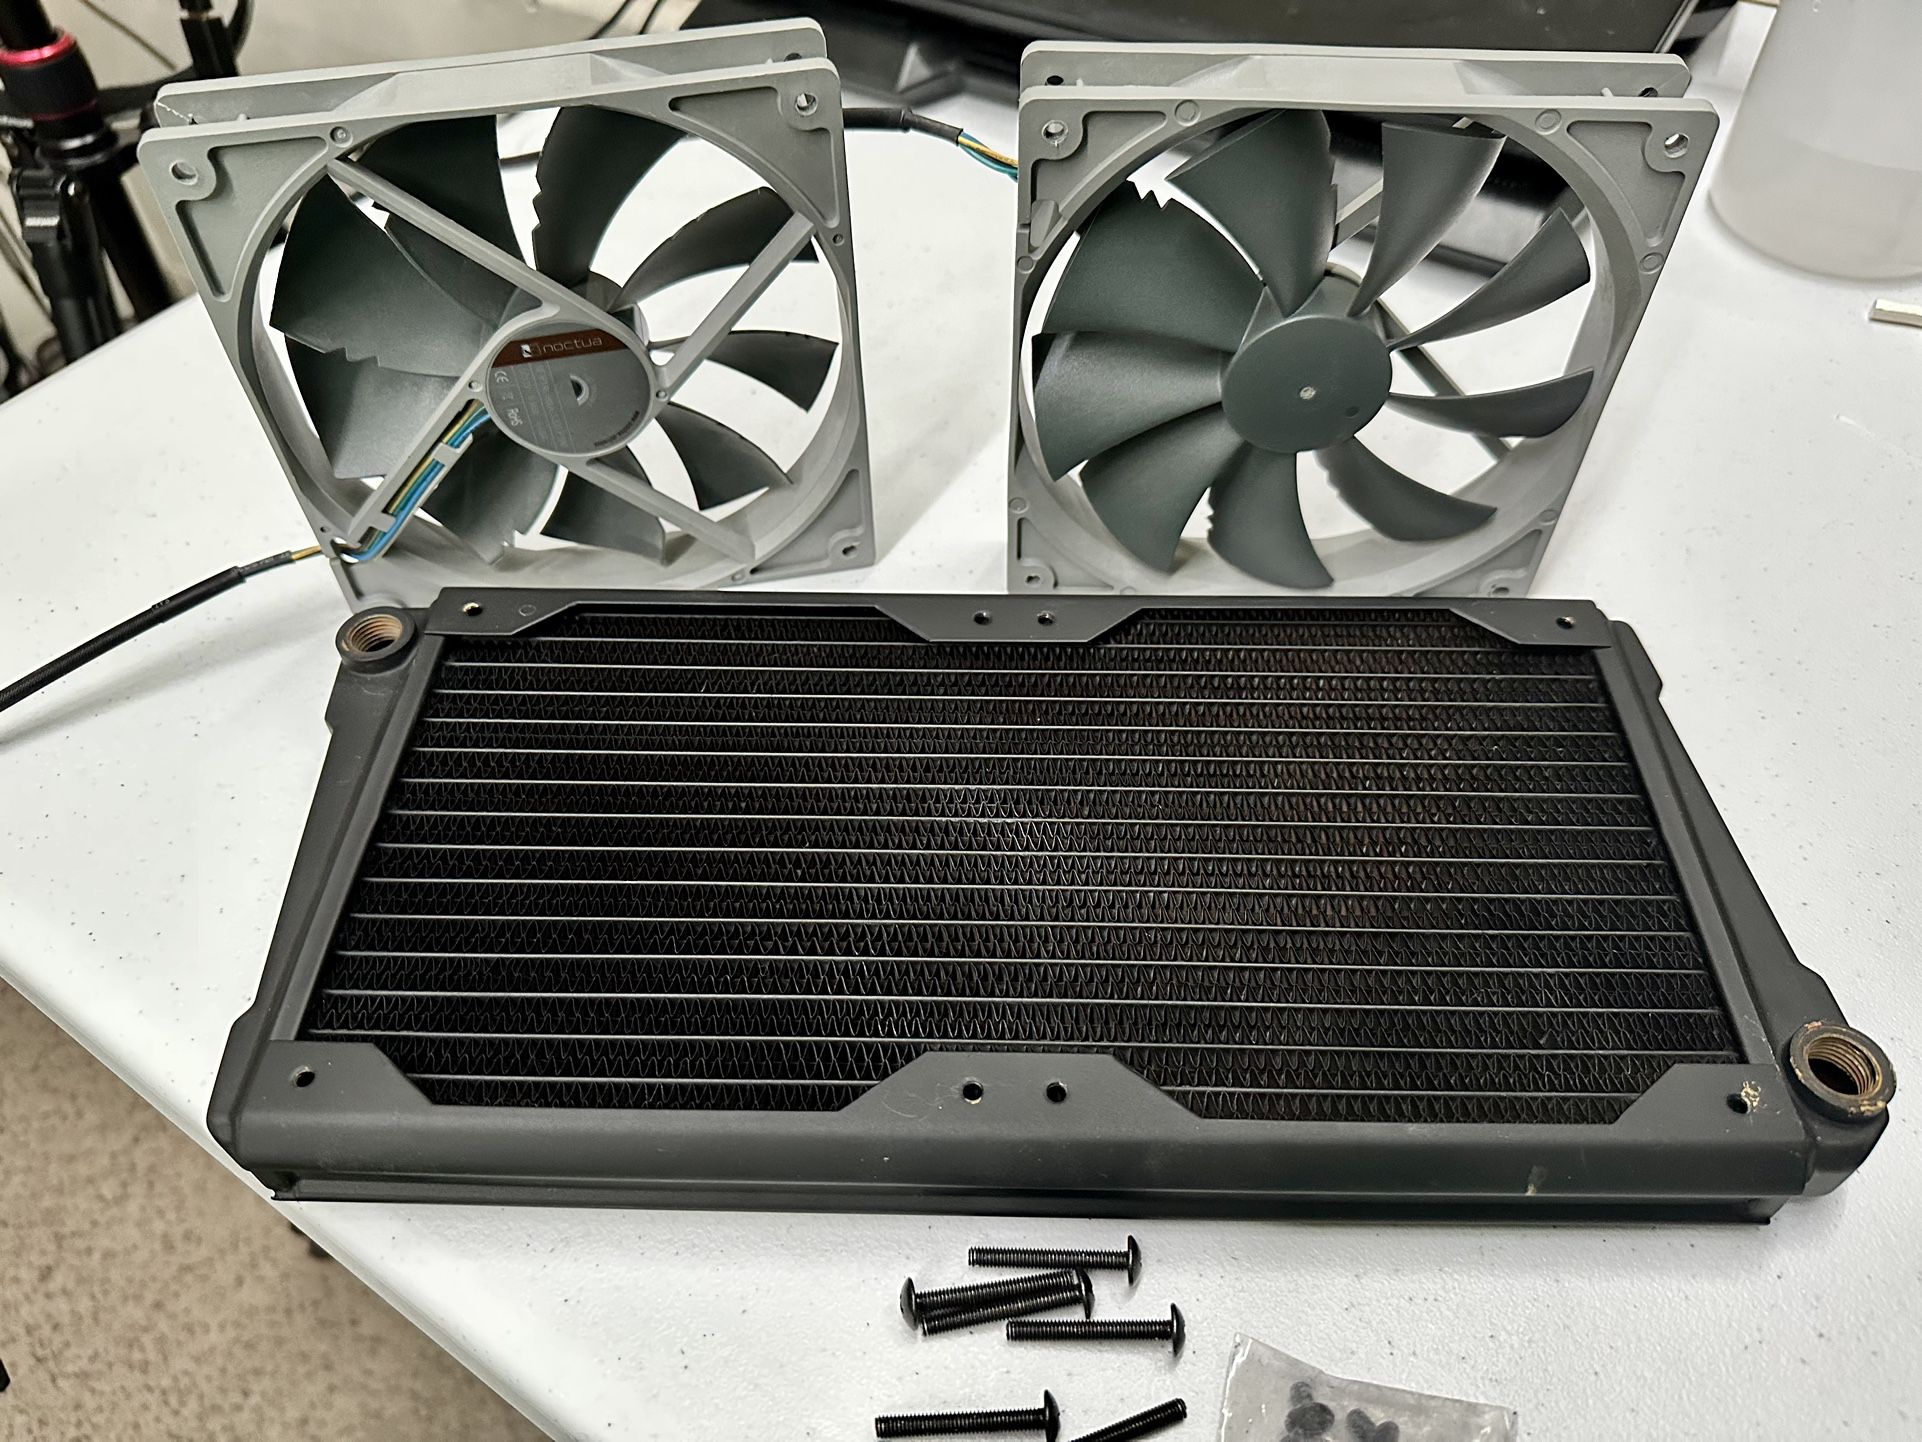 Hardware Labs Black Ice Nemesis GTS 280 X-flow radiator + 2 Noctua Redux fans for Tucson, AZ - OfferUp